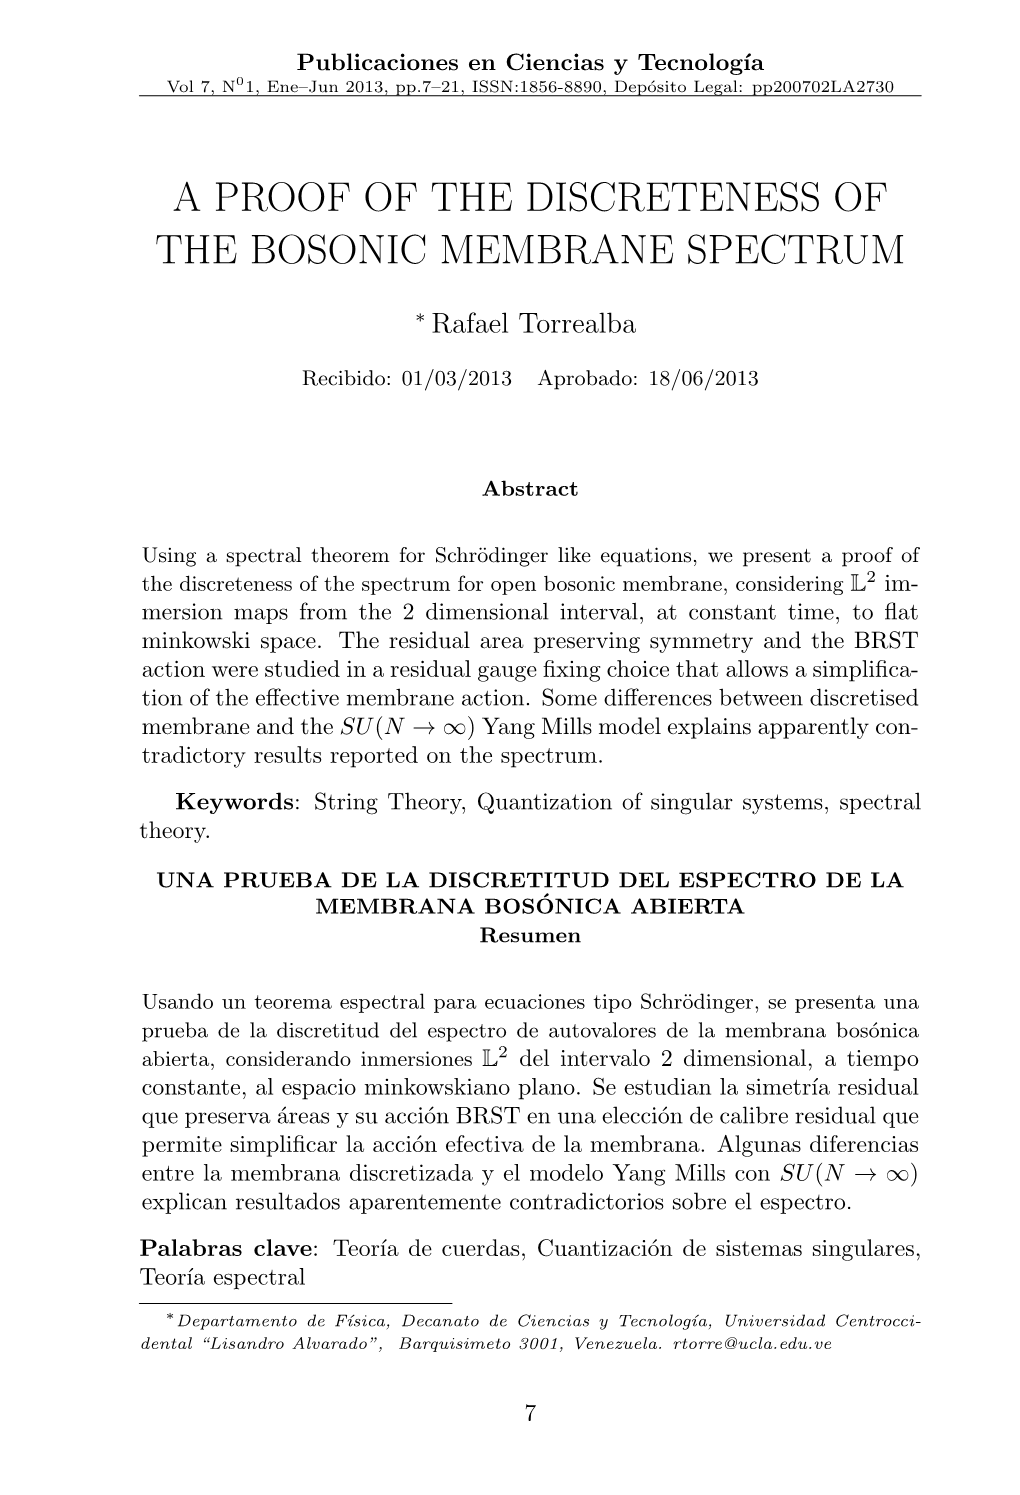 A Proof of the Discreteness of the Bosonic Membrane Spectrum